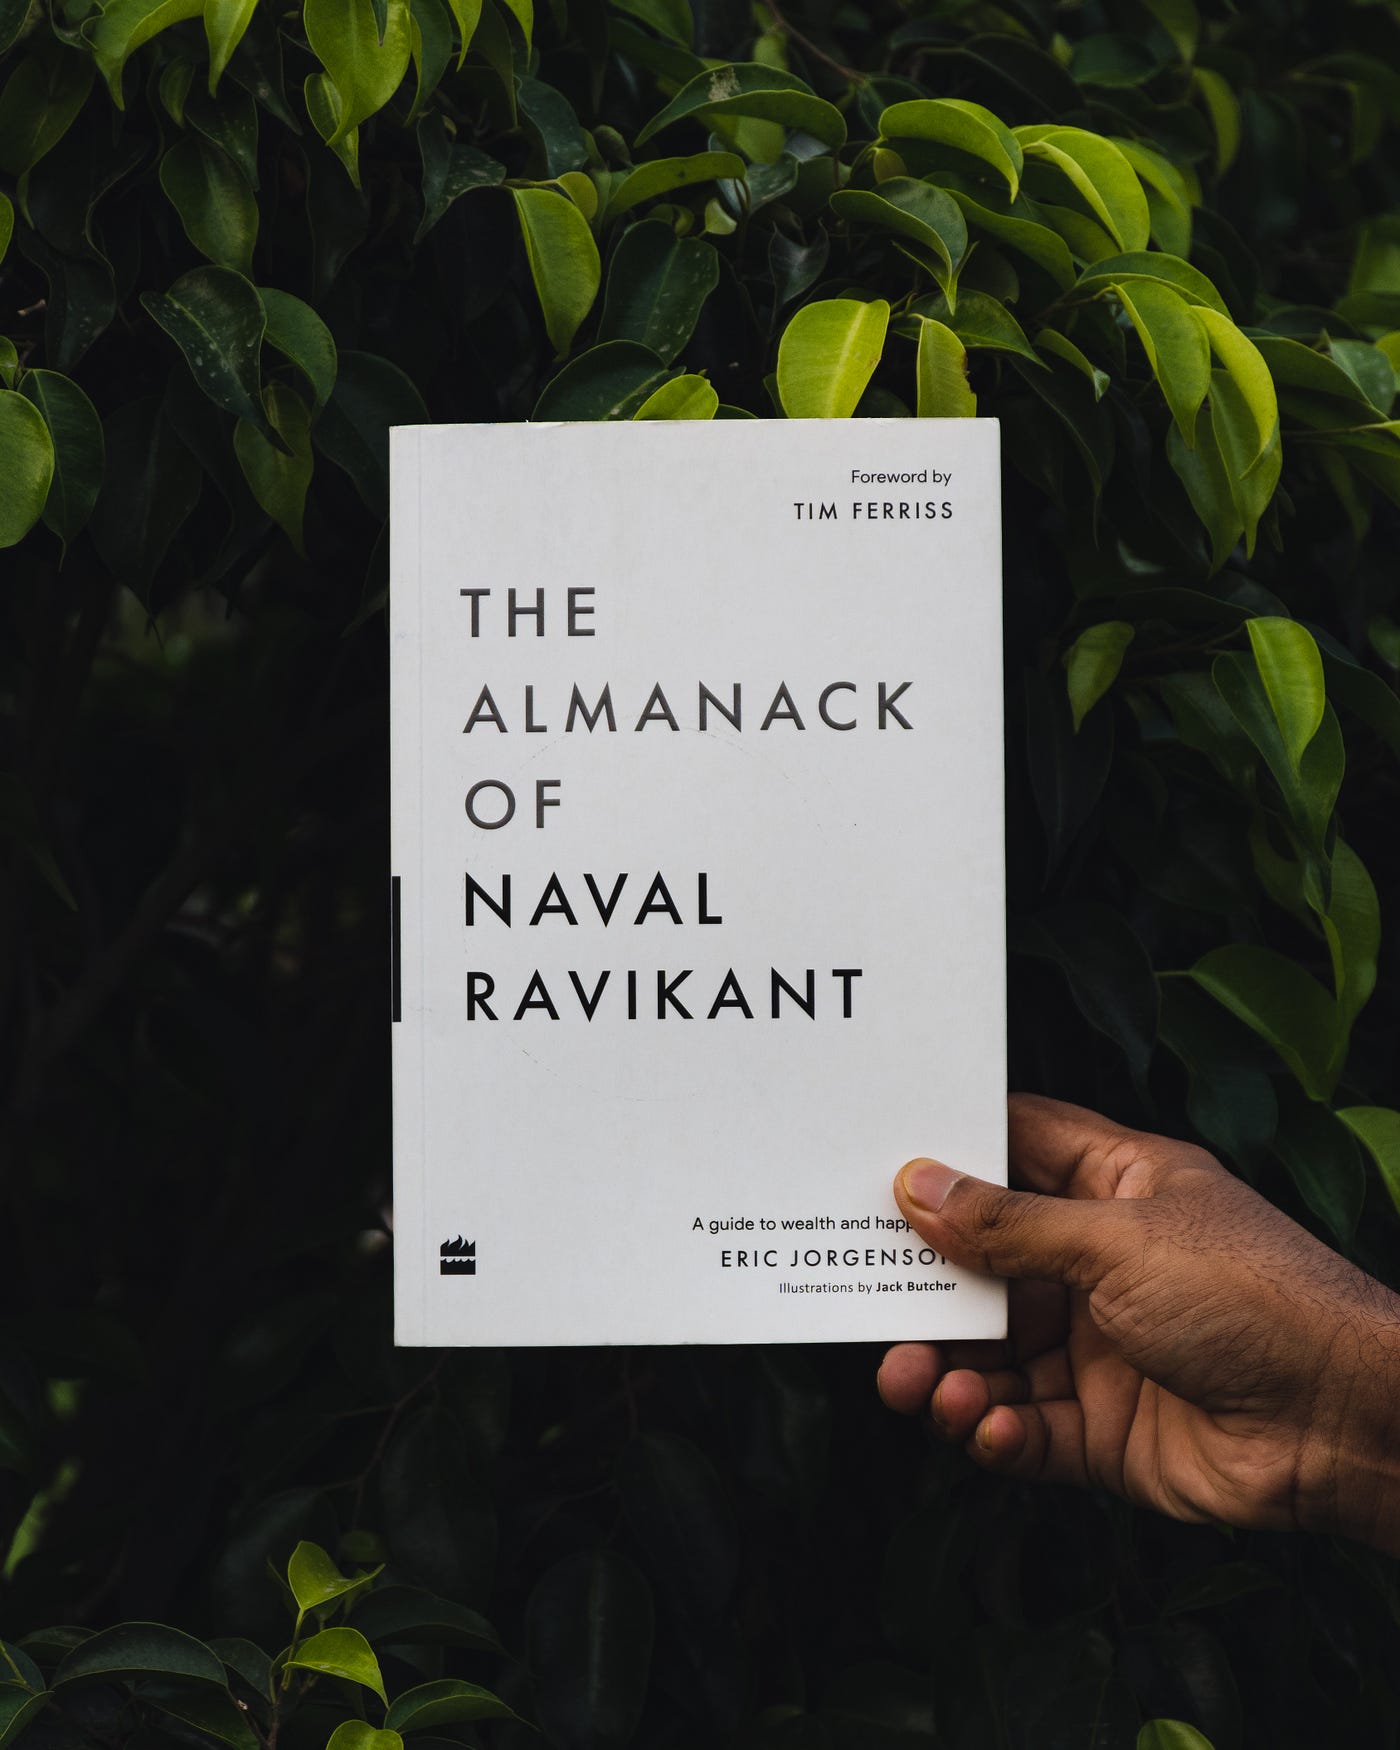 The Almanack of Naval Ravikant Summary